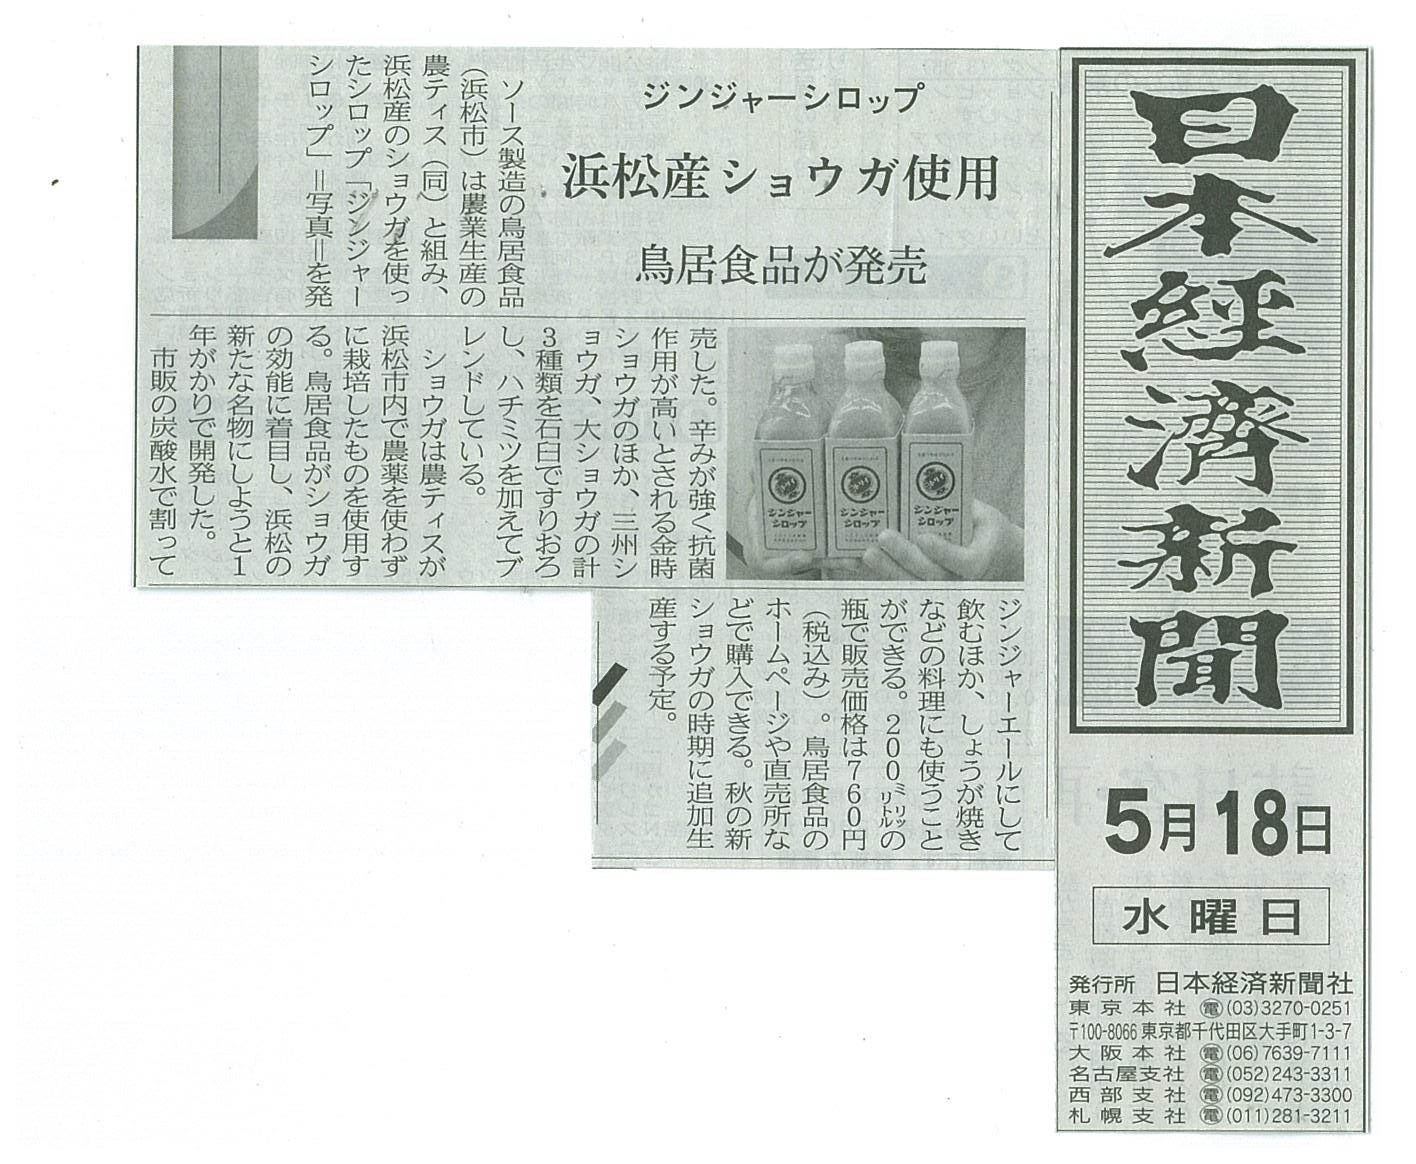 http://www.torii-sauce.jp/media/%E3%82%B8%E3%83%B3%E3%82%B8%E3%83%A3%E3%83%BC%E3%82%B7%E3%83%AD%E3%83%83%E3%83%97%E6%97%A5%E7%B5%8C.jpg